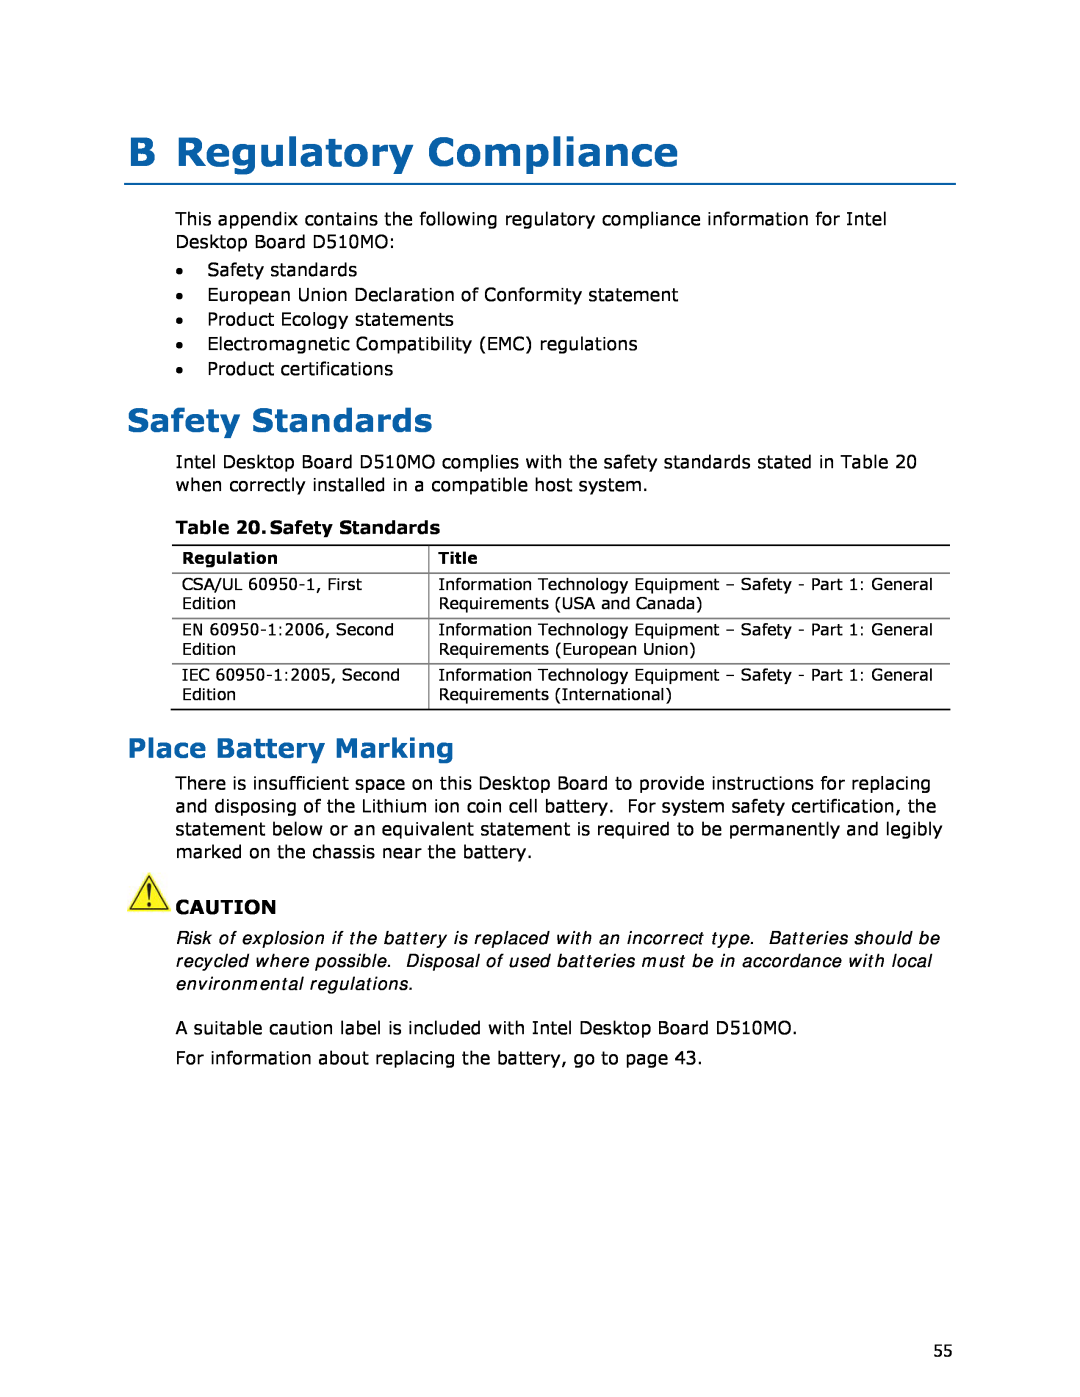 Intel D510MO manual B Regulatory Compliance, Safety Standards, Place Battery Marking 